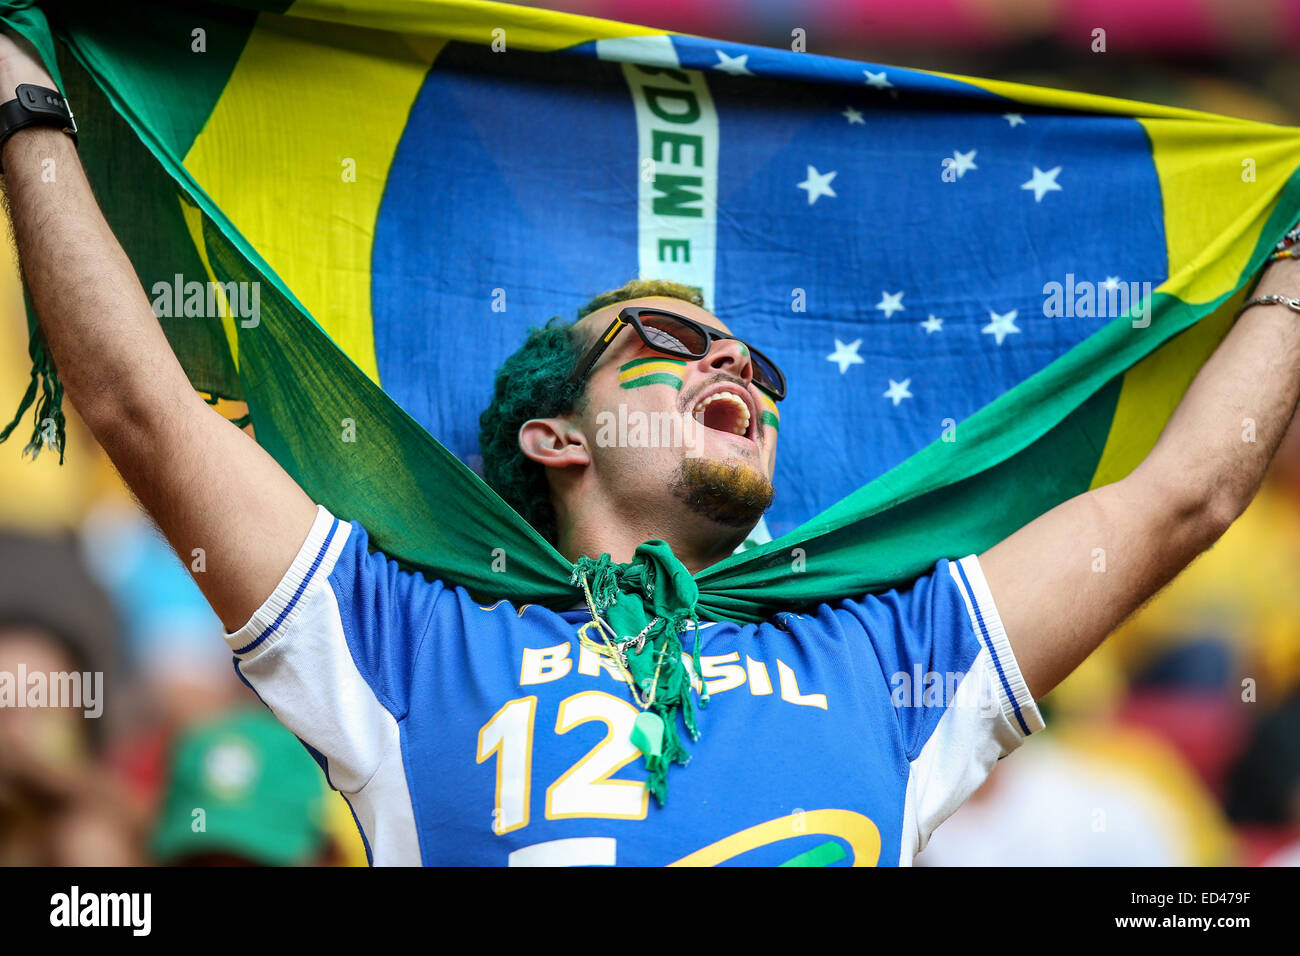 2014 FIFA World Cup - Kamerun V Brasilien - Atmosphäre - Tag 12 wo: Brasilia, DF, Brasilien bei: 23. Juni 2014 Stockfoto